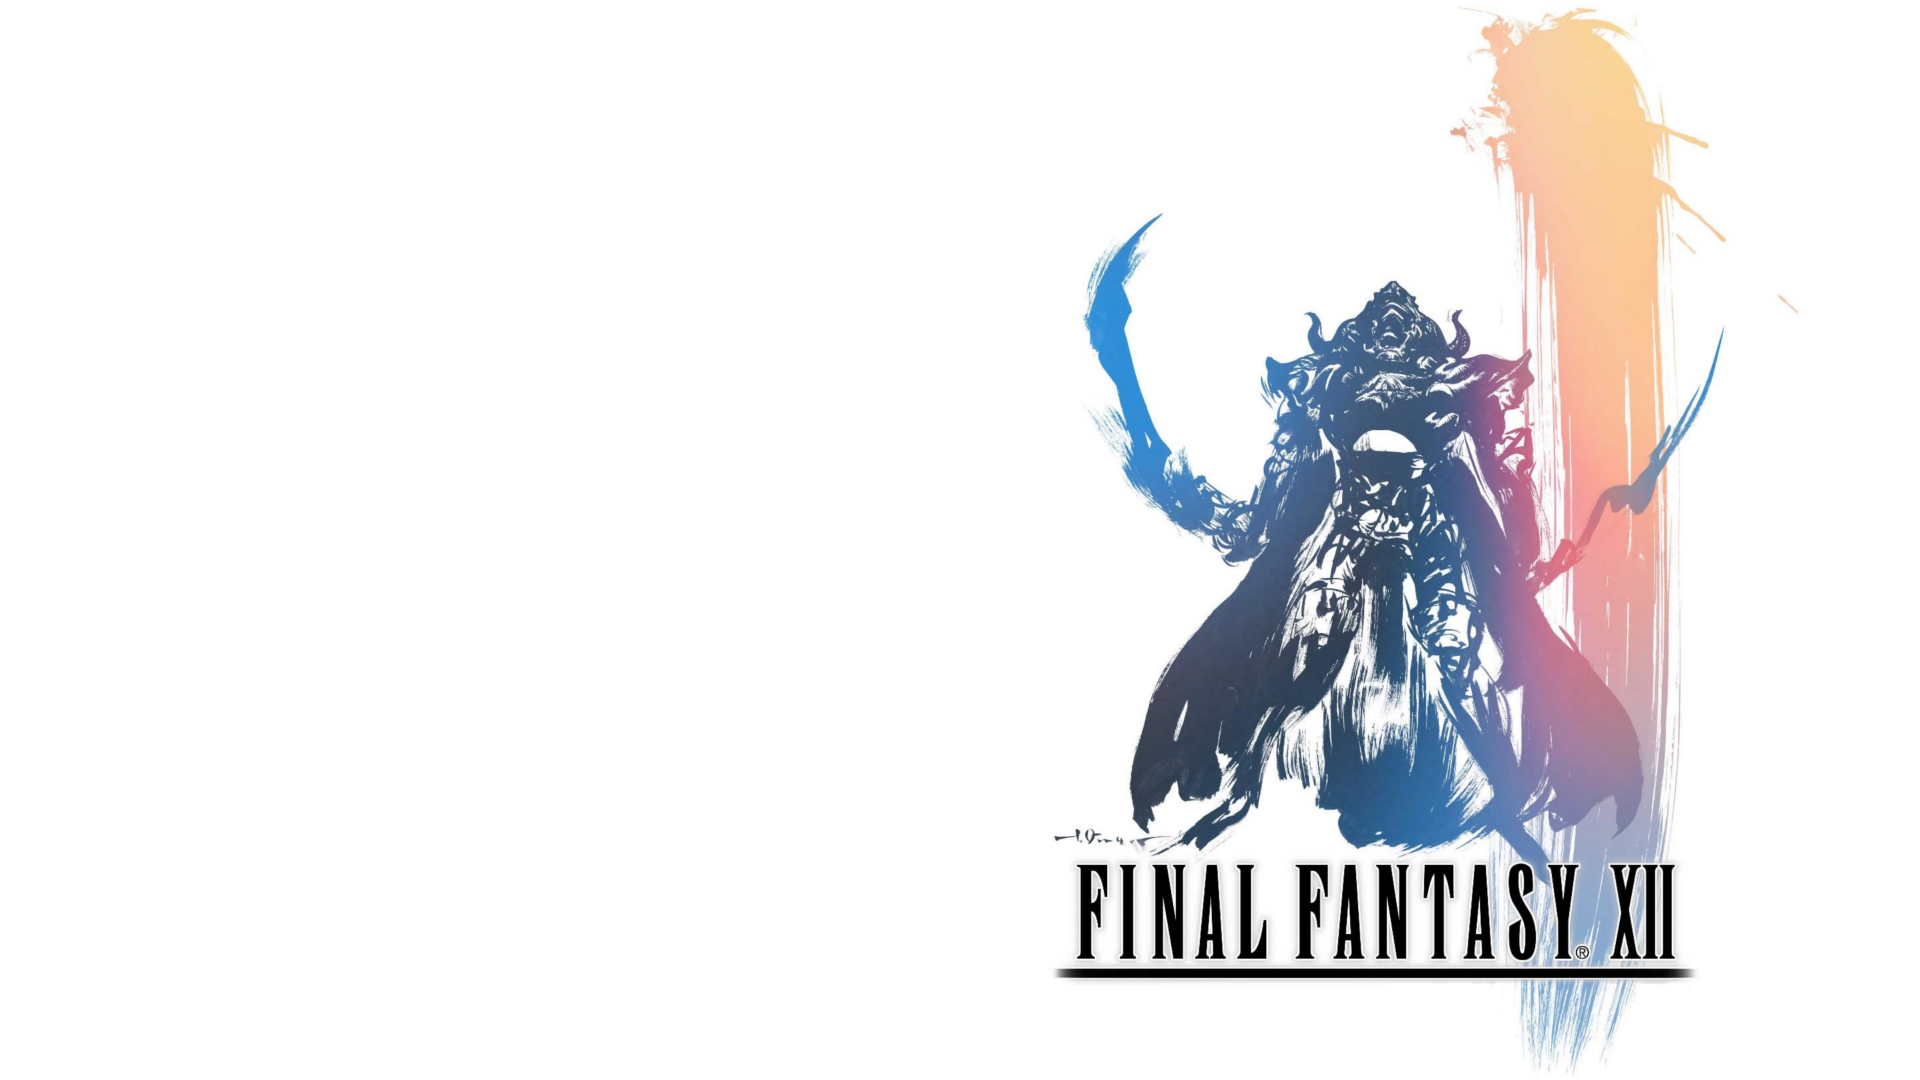 Gdr Final Fantasy XII